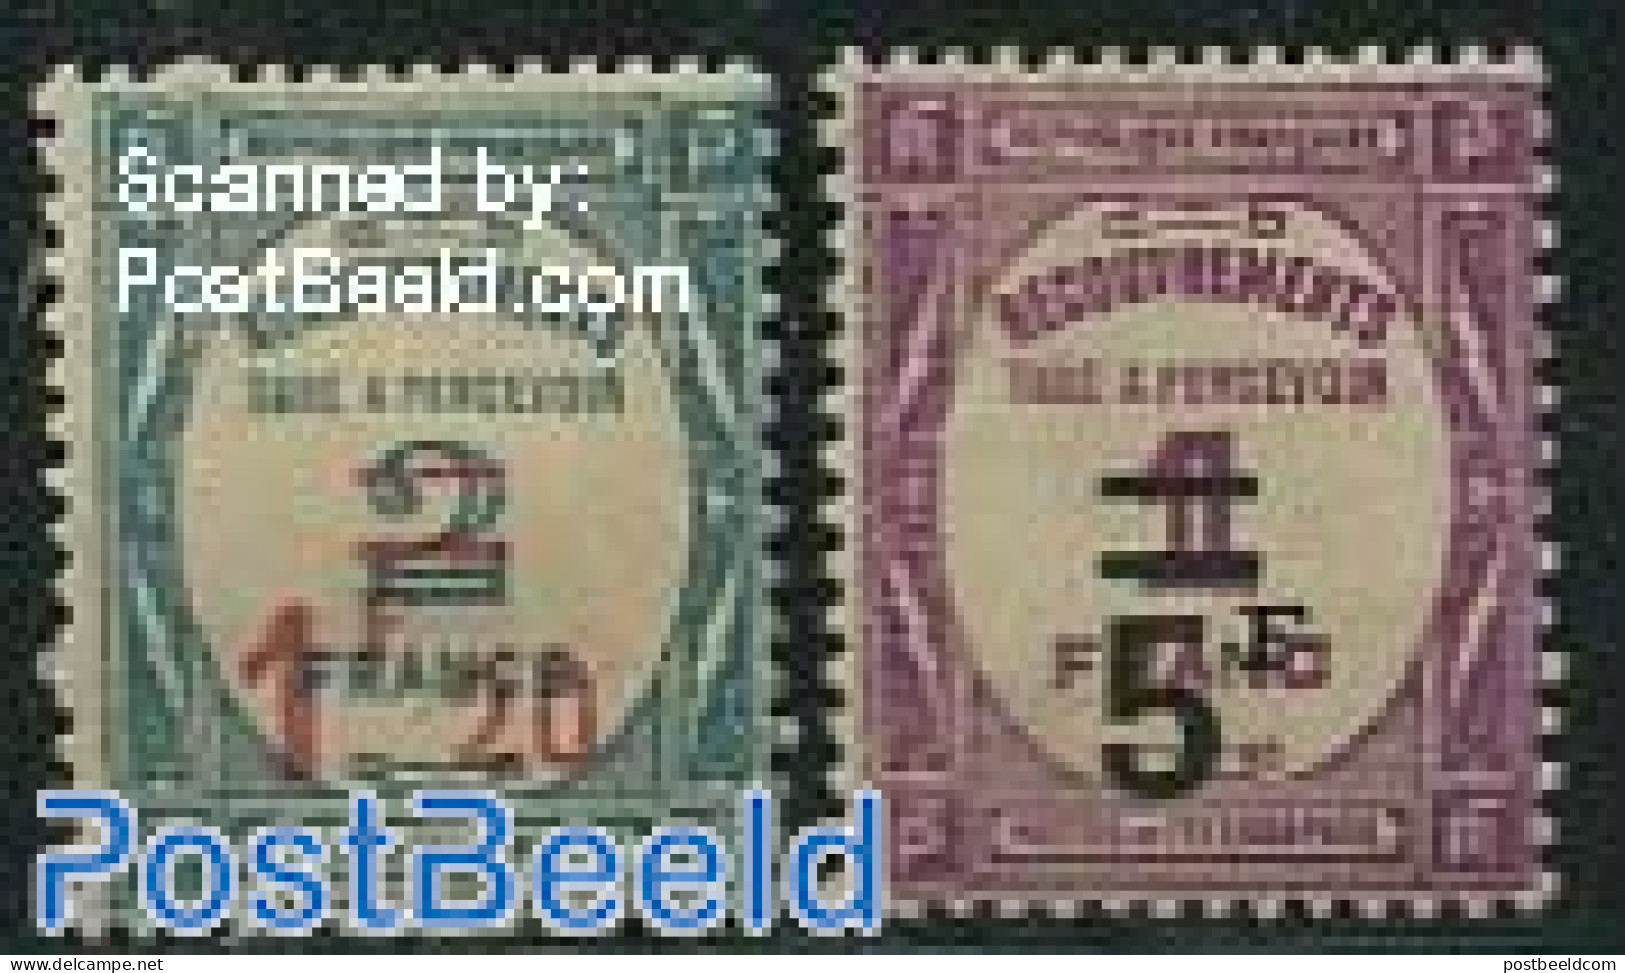 France 1929 Postage Due, Overprints 2v, Unused (hinged) - 1859-1959 Neufs